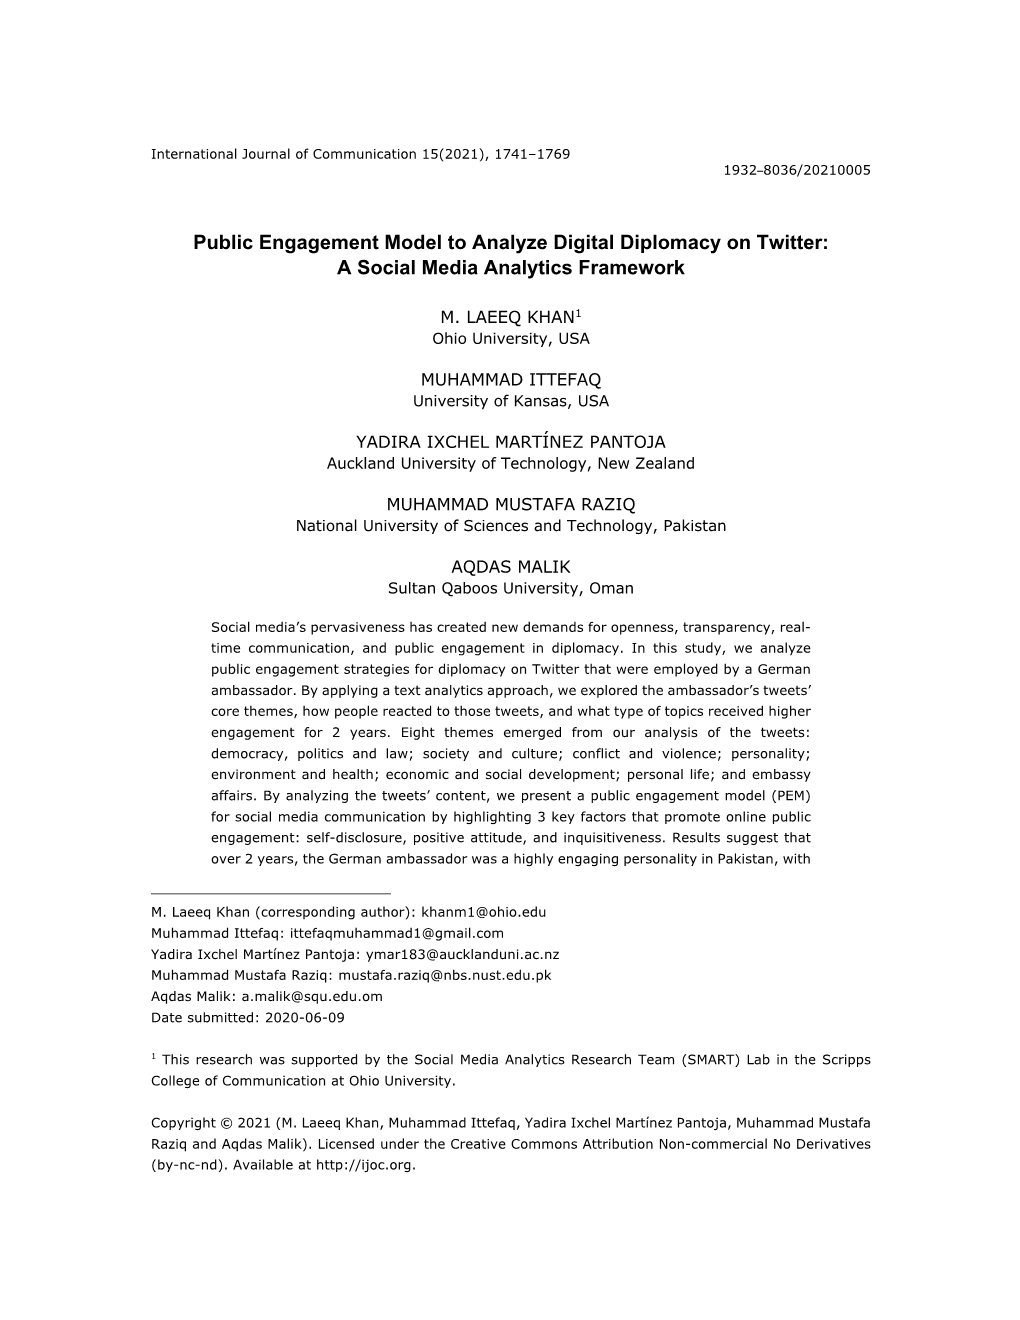 Public Engagement Model to Analyze Digital Diplomacy on Twitter: a Social Media Analytics Framework